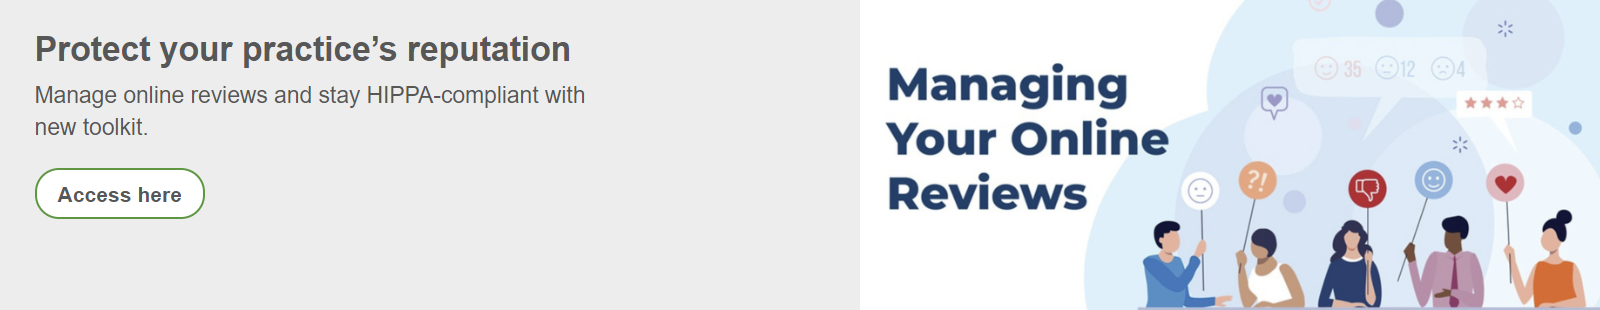 Managing_Your_Online_Reviews_HeroExample